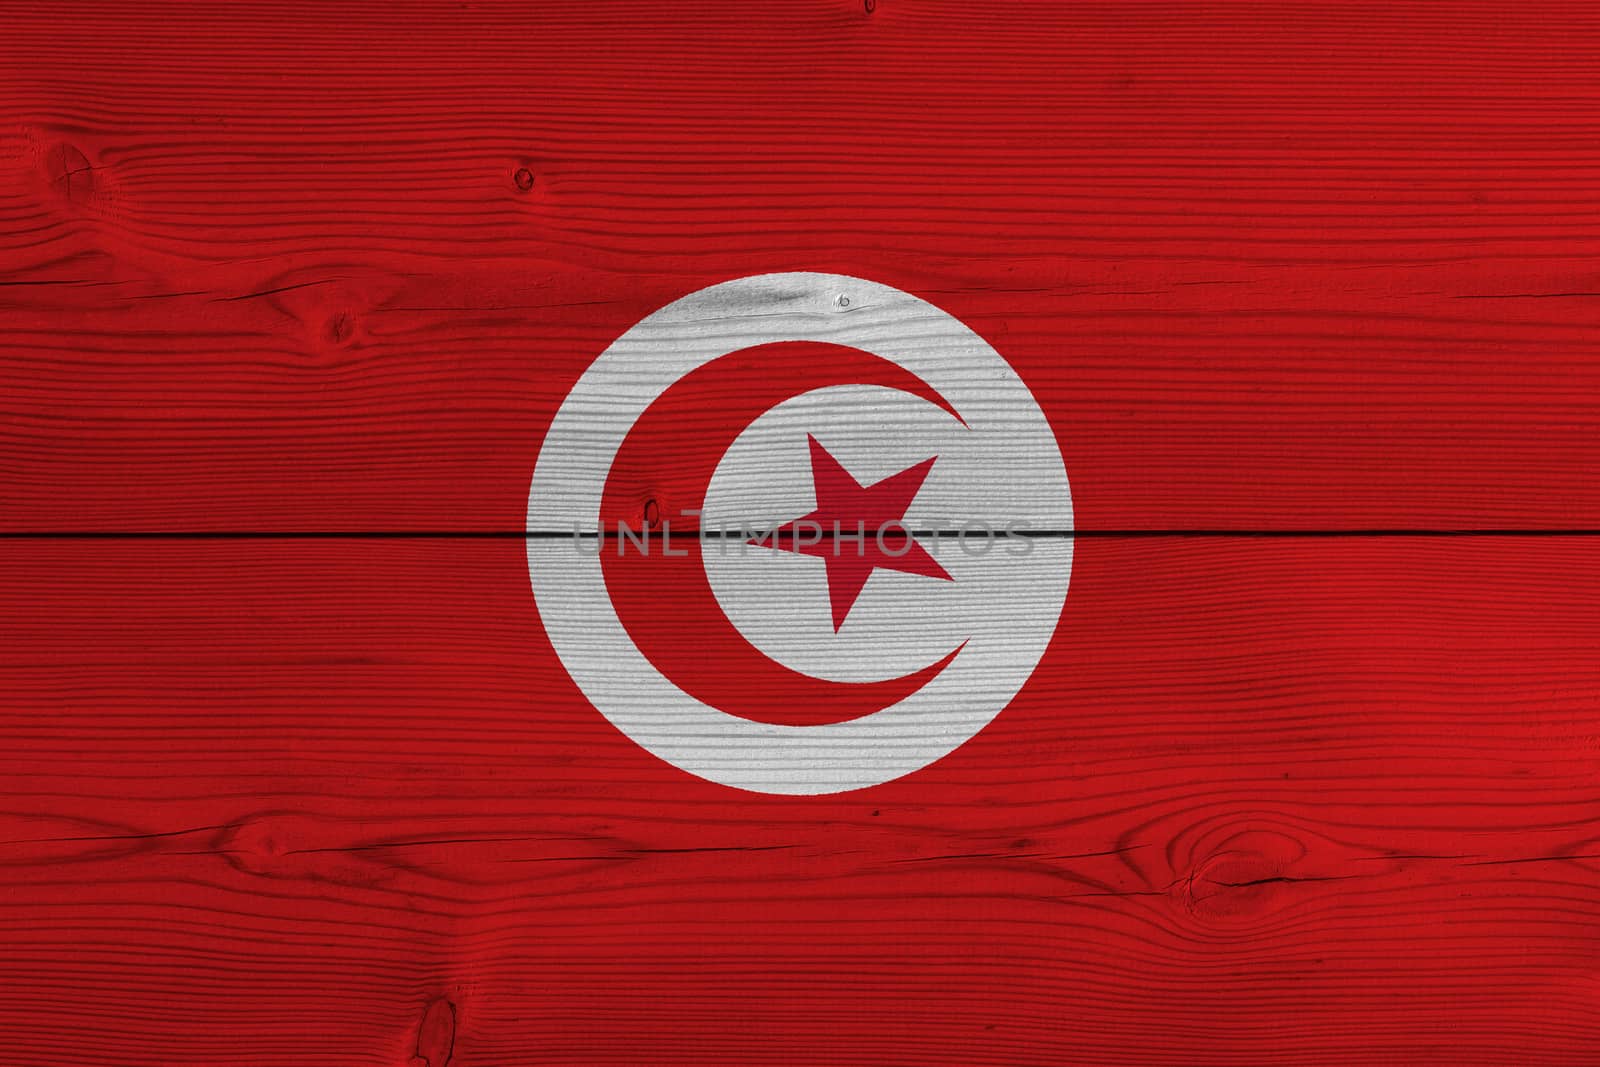 Tunisia flag painted on old wood plank. Patriotic background. National flag of Tunisia